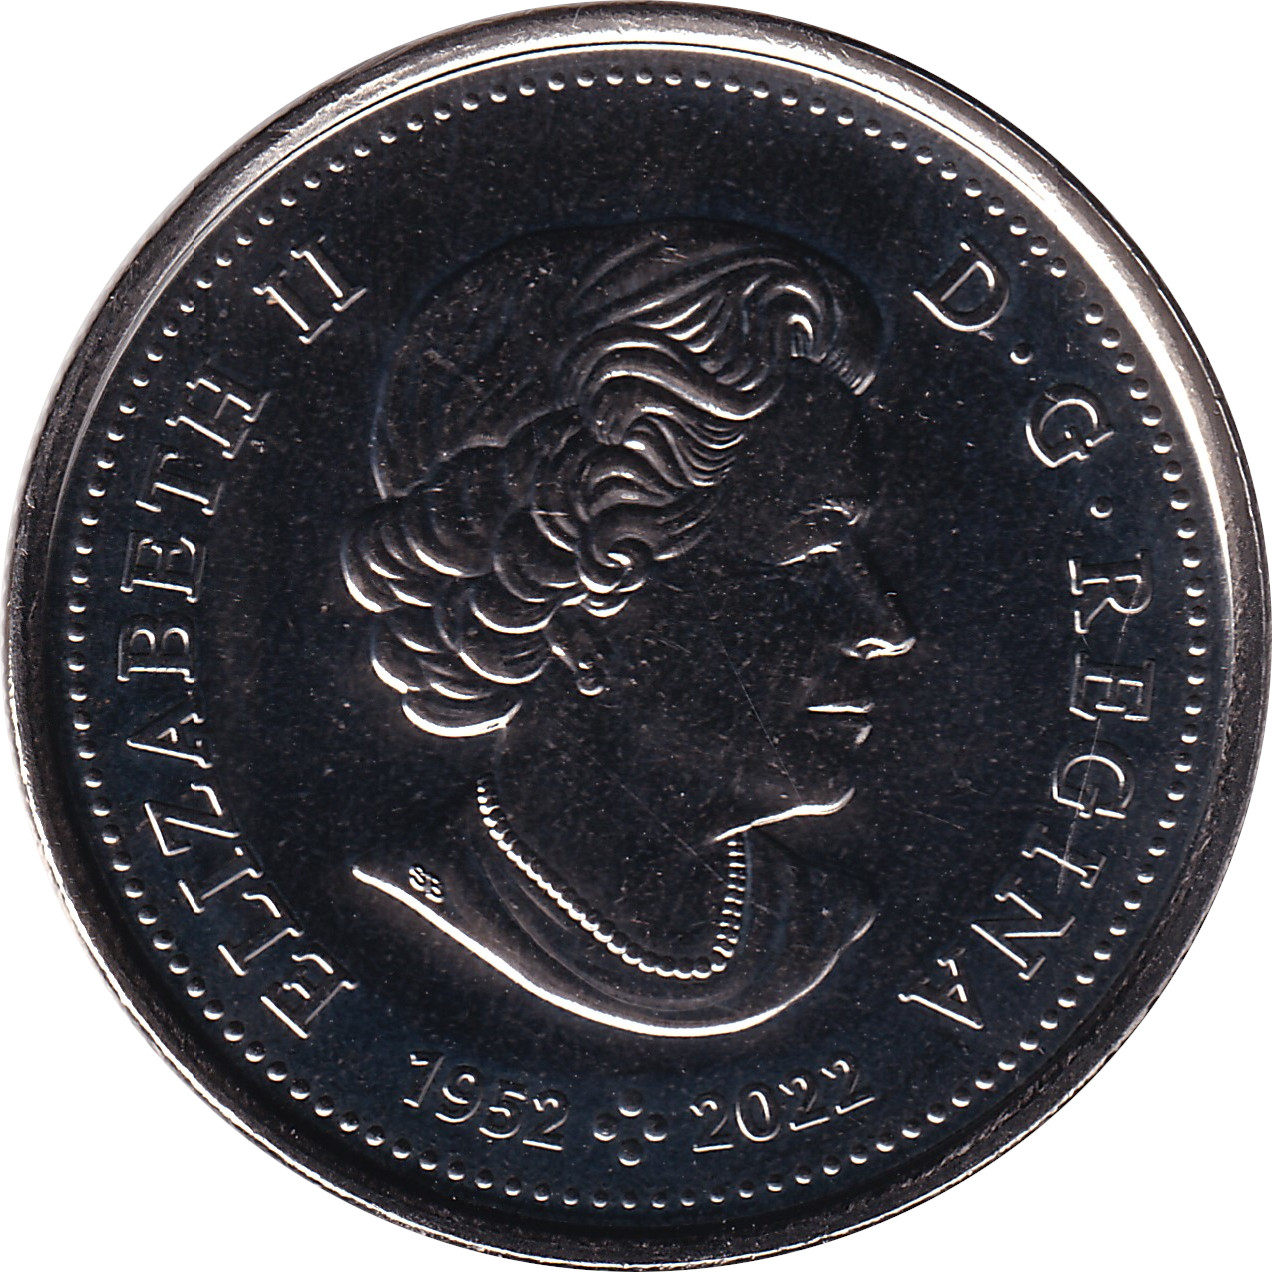 50 cents - Elizabeth II - Hommage